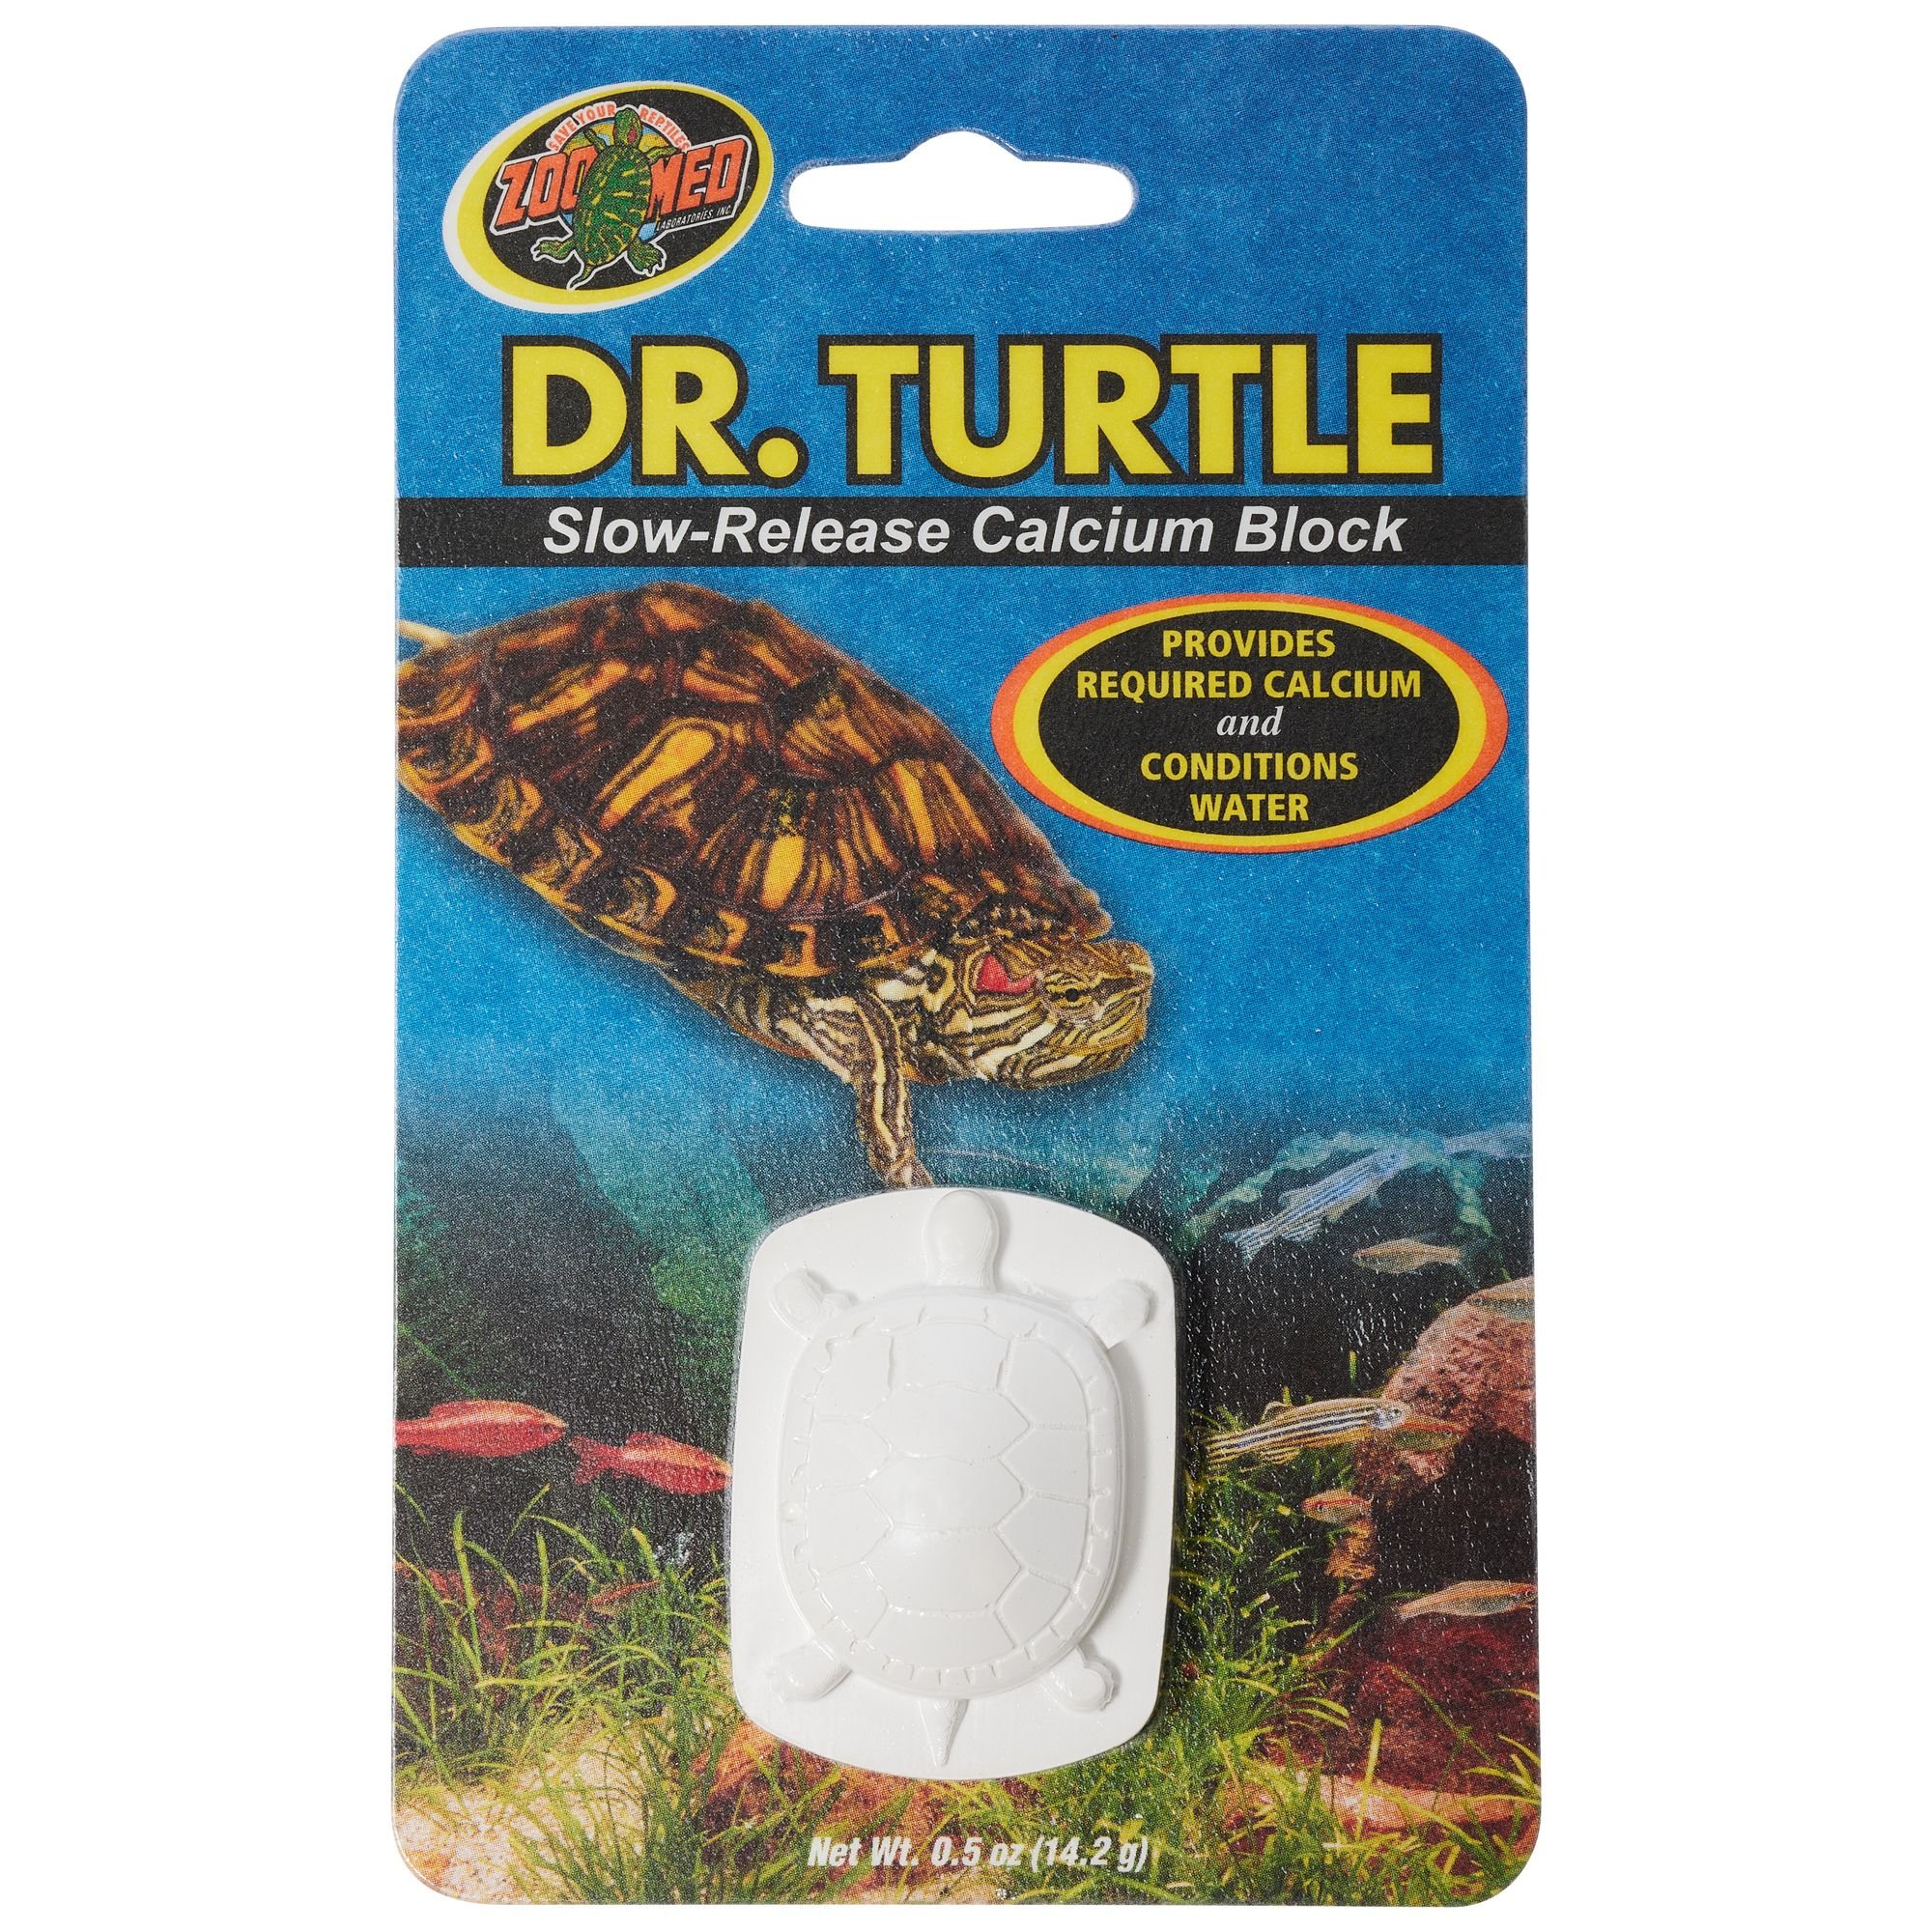 Dr. Turtle Slow-Release Calcium Block Turtle Supplement